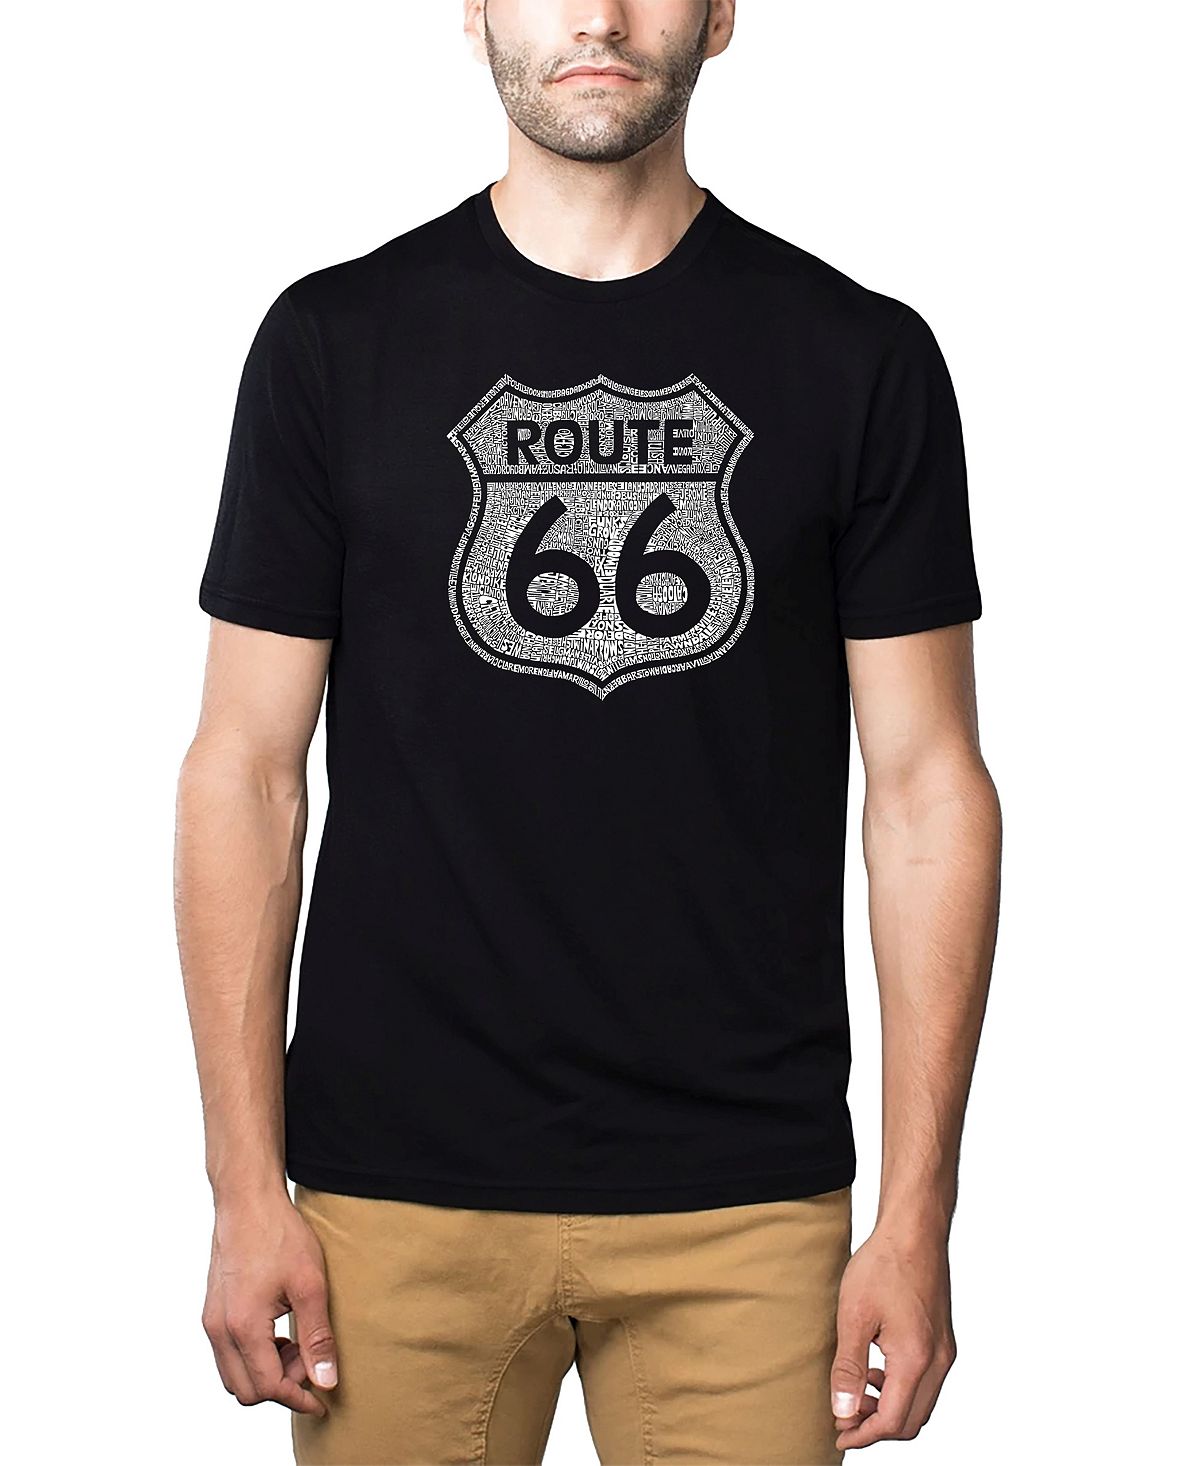 Мужская футболка premium blend word art - route 66 LA Pop Art, черный мужская футболка с длинным рукавом word art route 66 la pop art черный